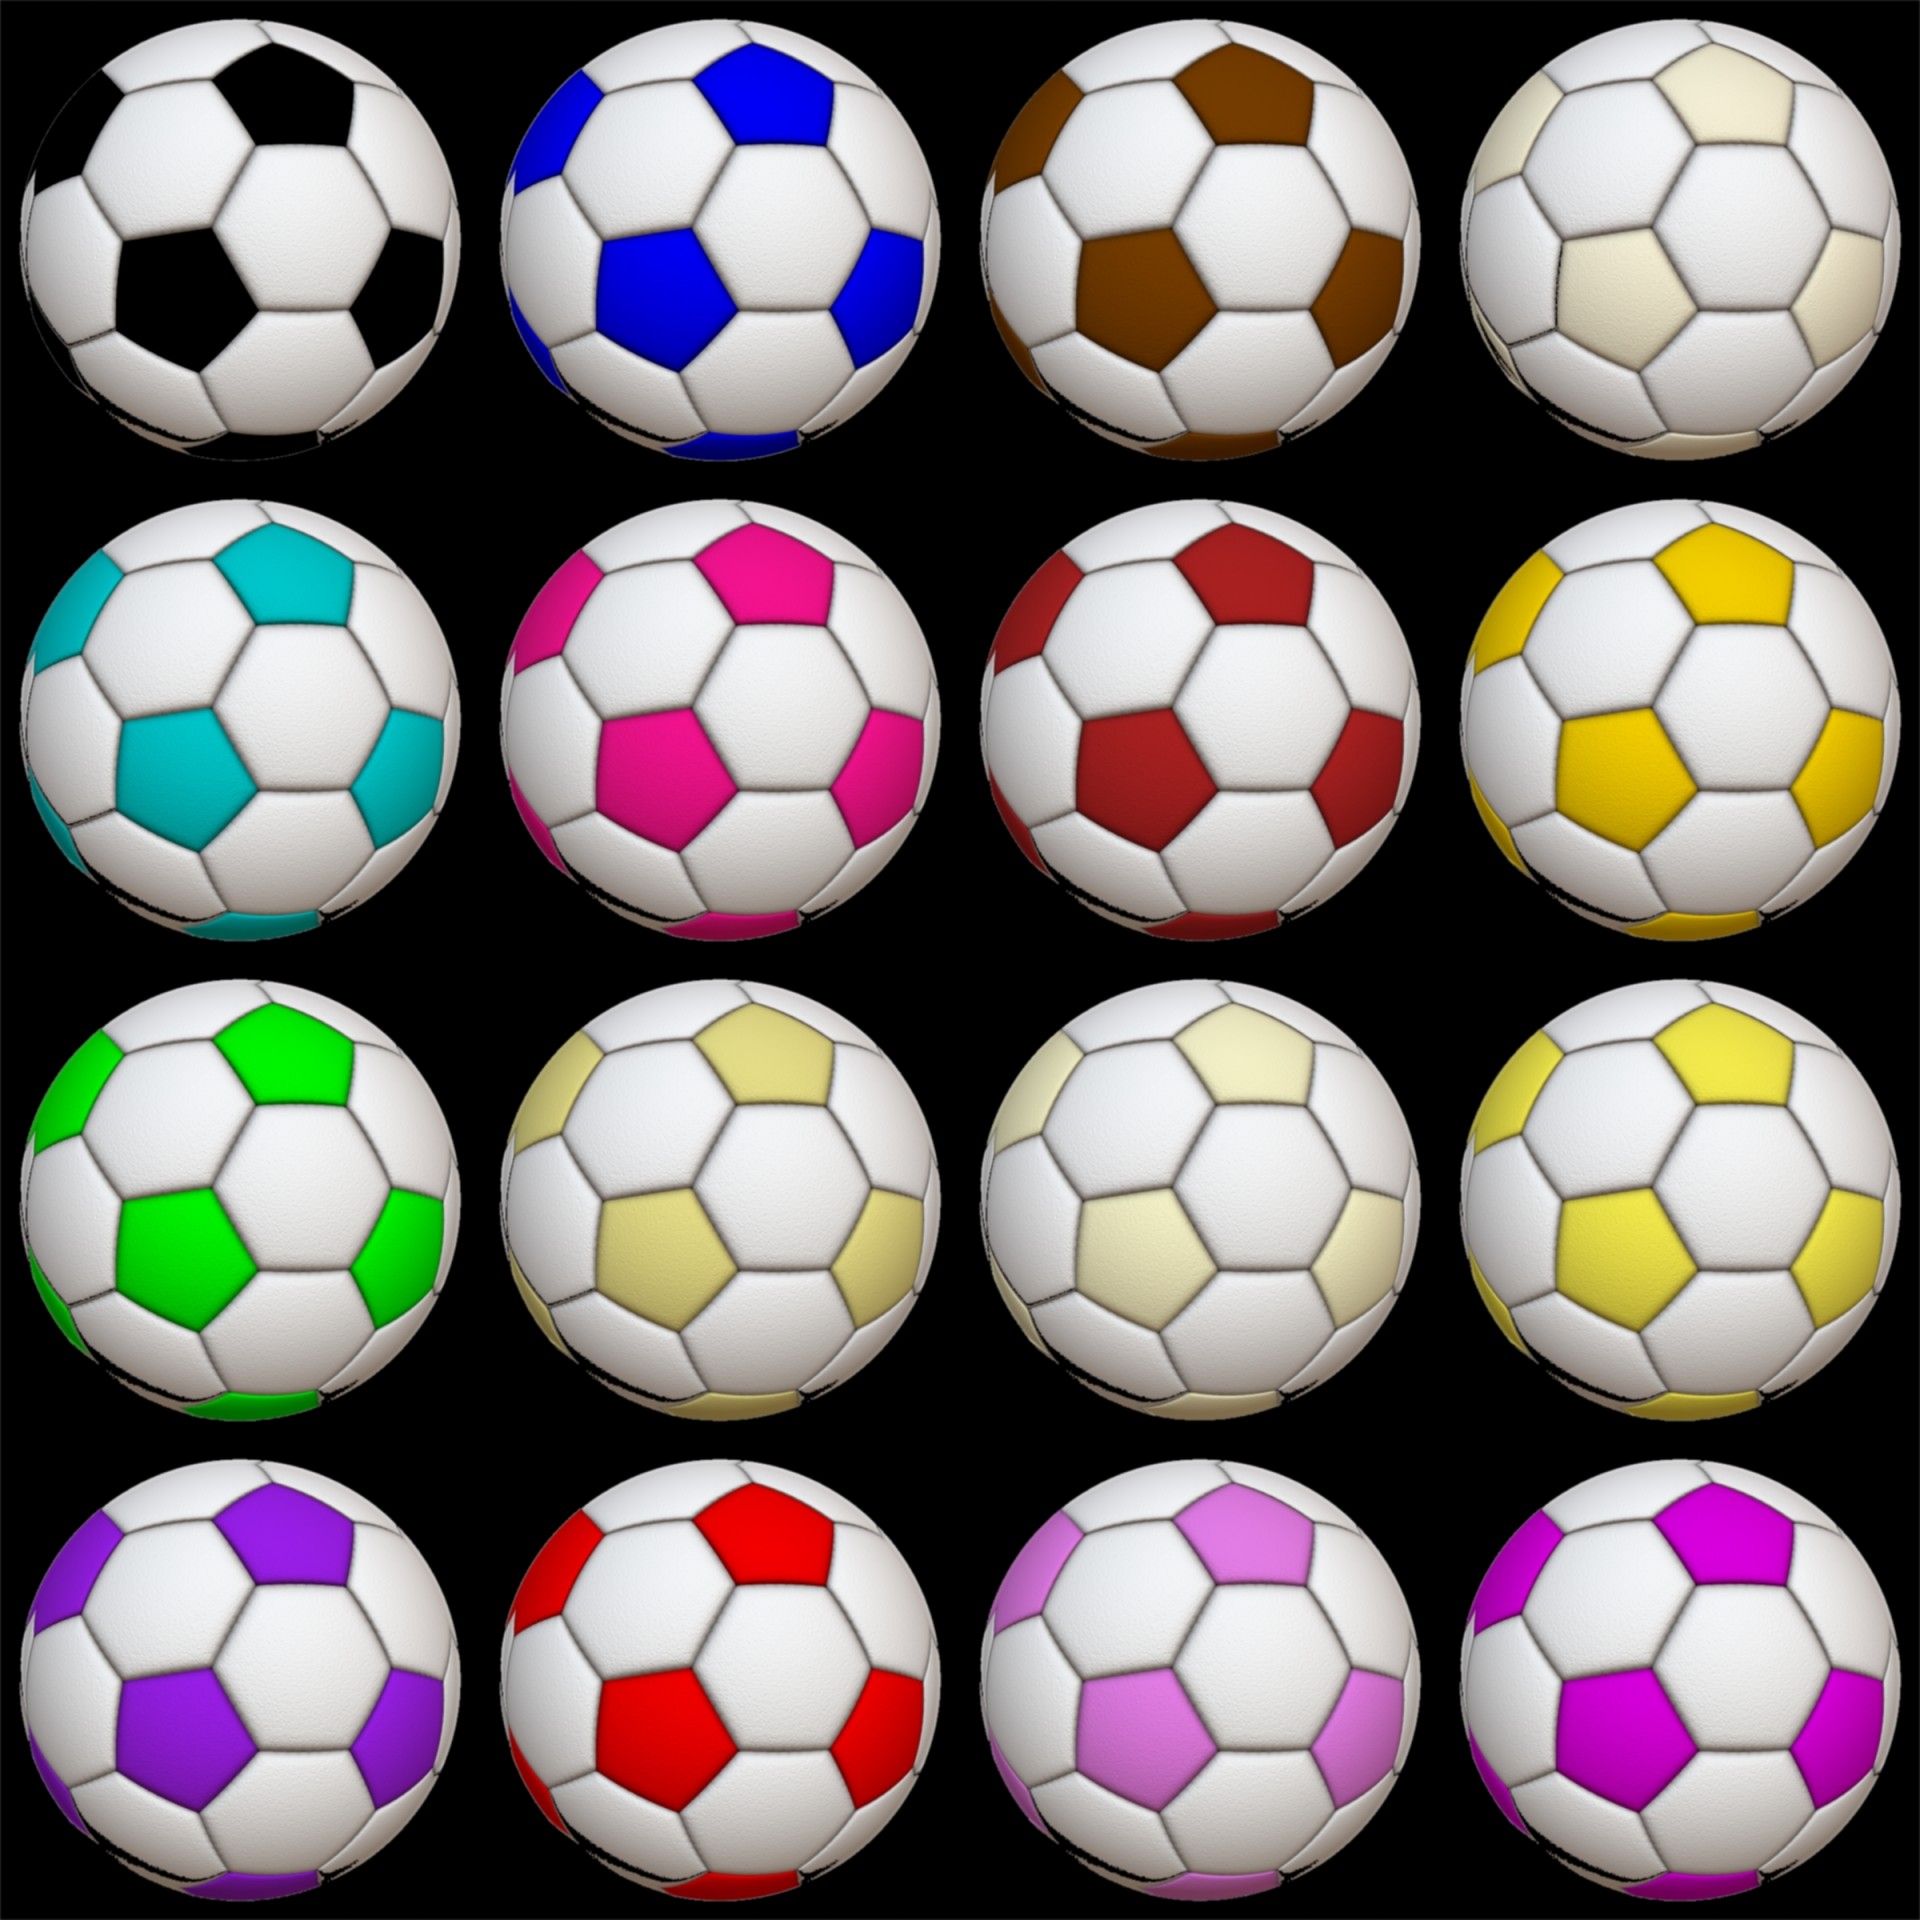 16 ball soccer ball free photo